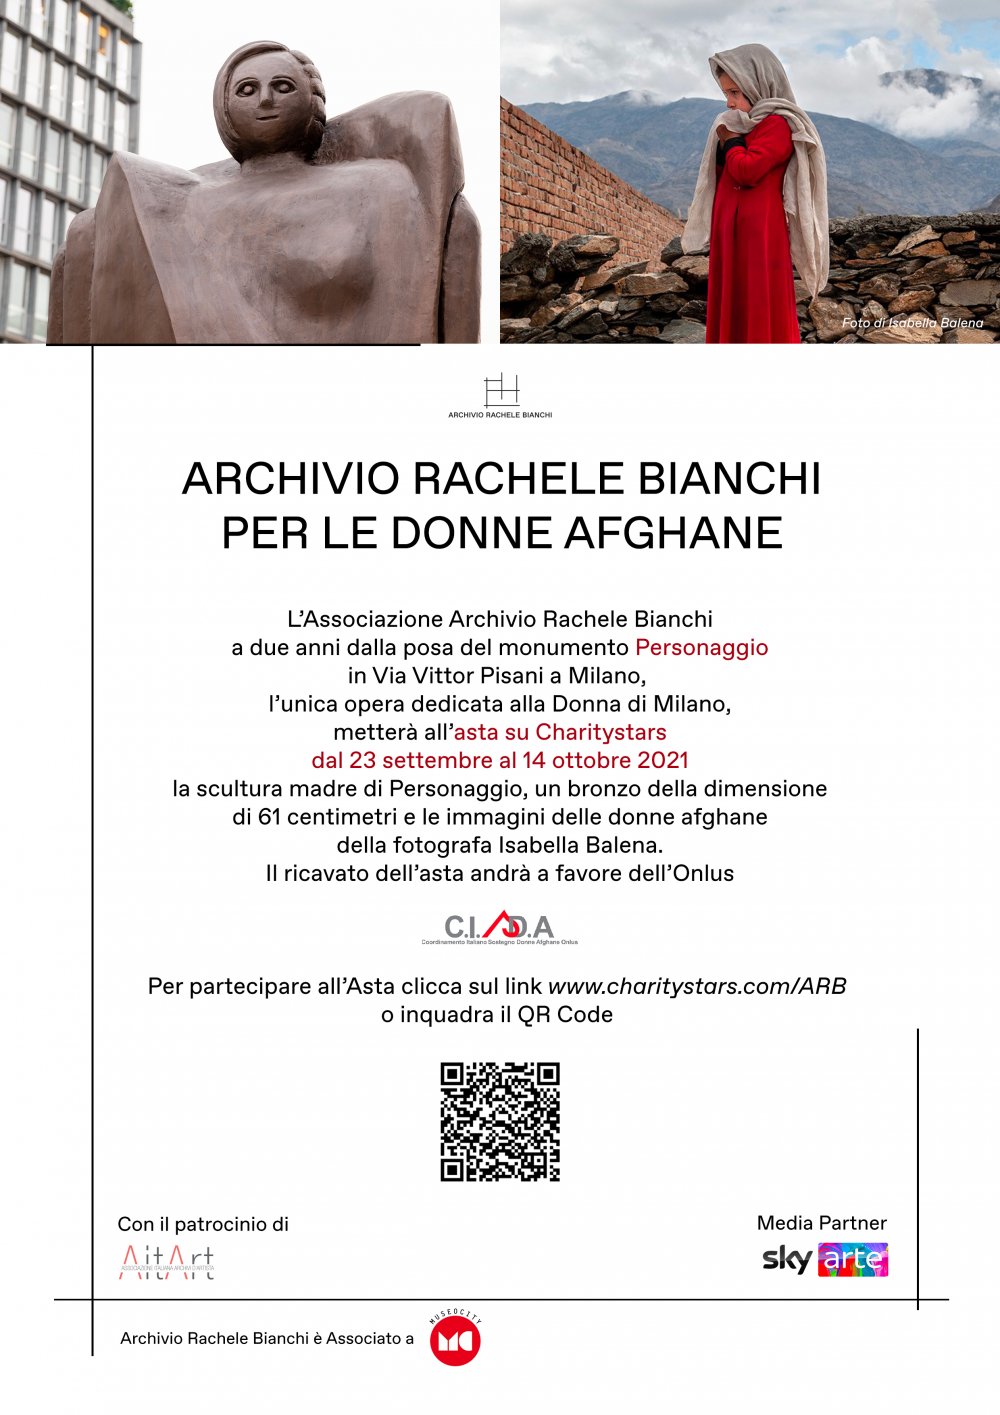 Archivio Rachele Bianchi per le donneAfghane